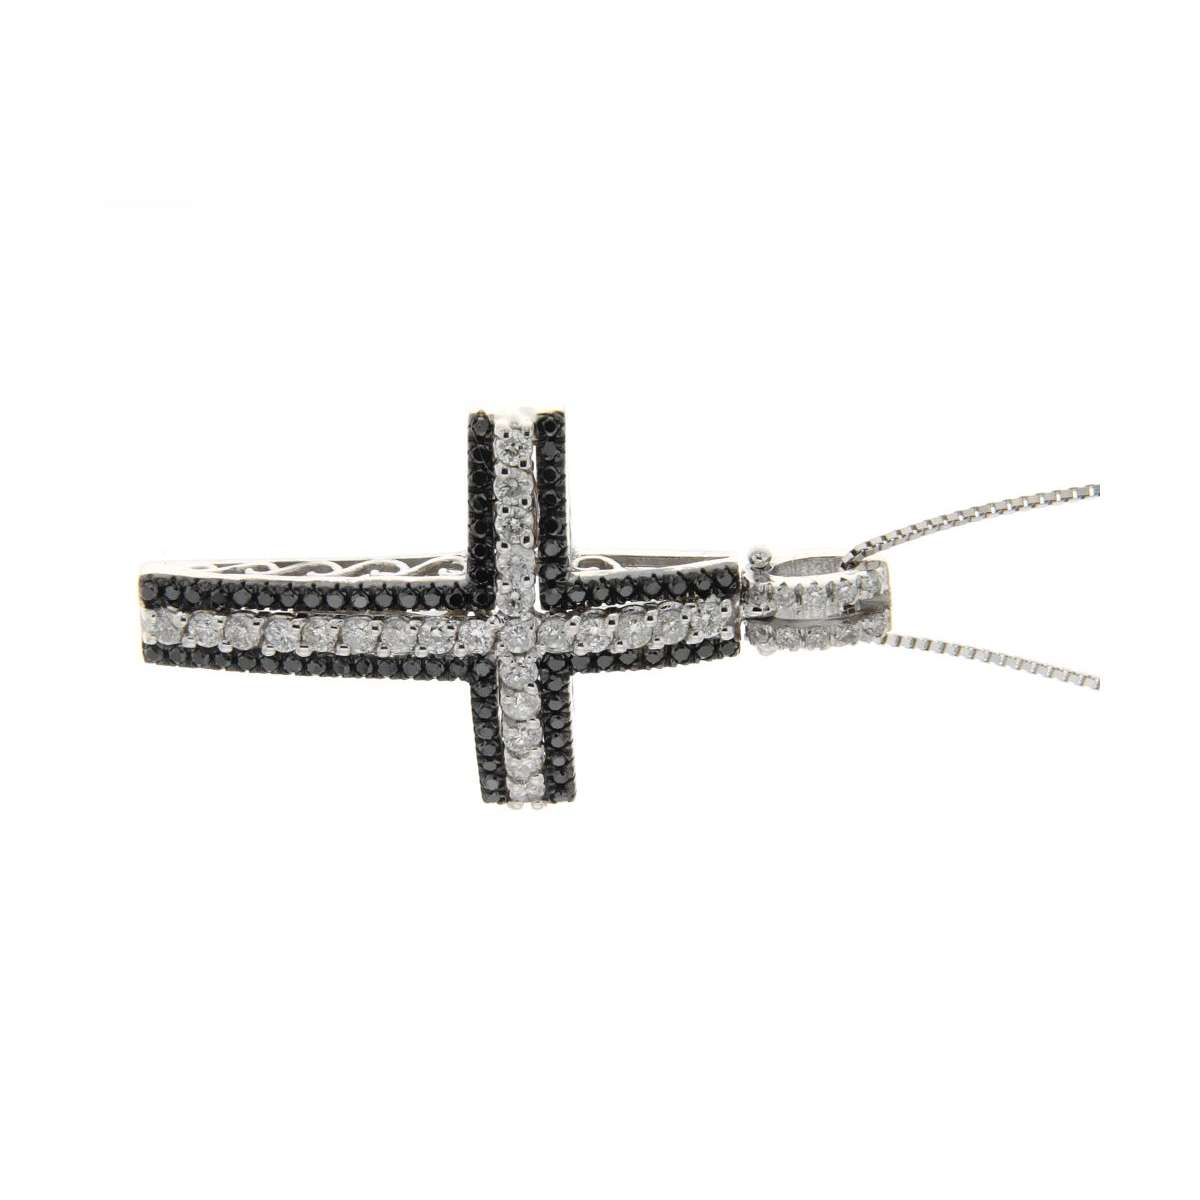 Cross necklace 0.72 carats black and white diamonds G-VS1